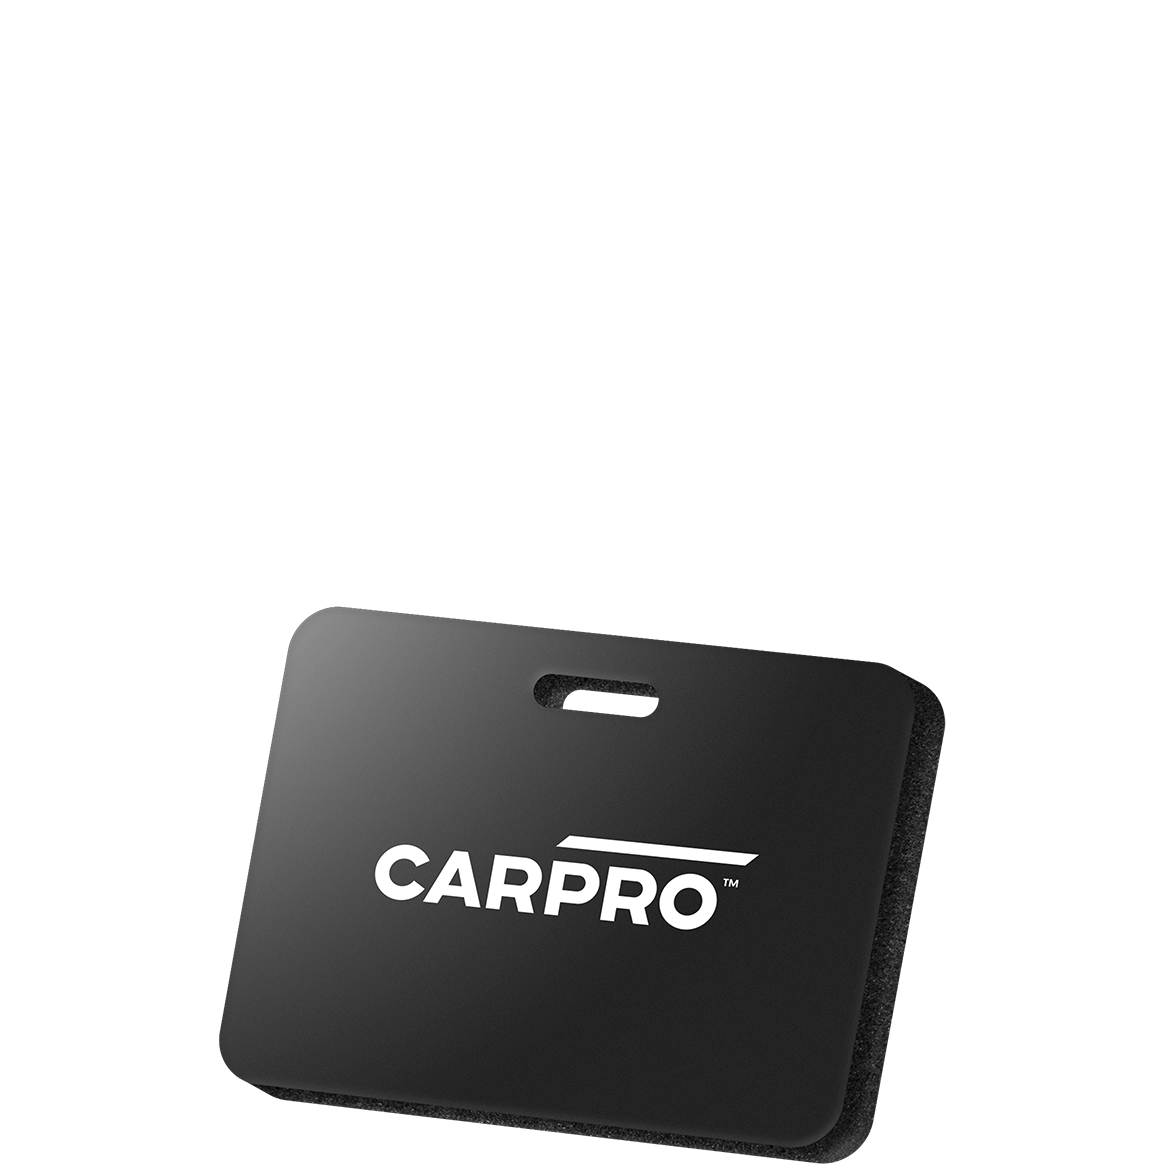 CarPro Kneeling Pad